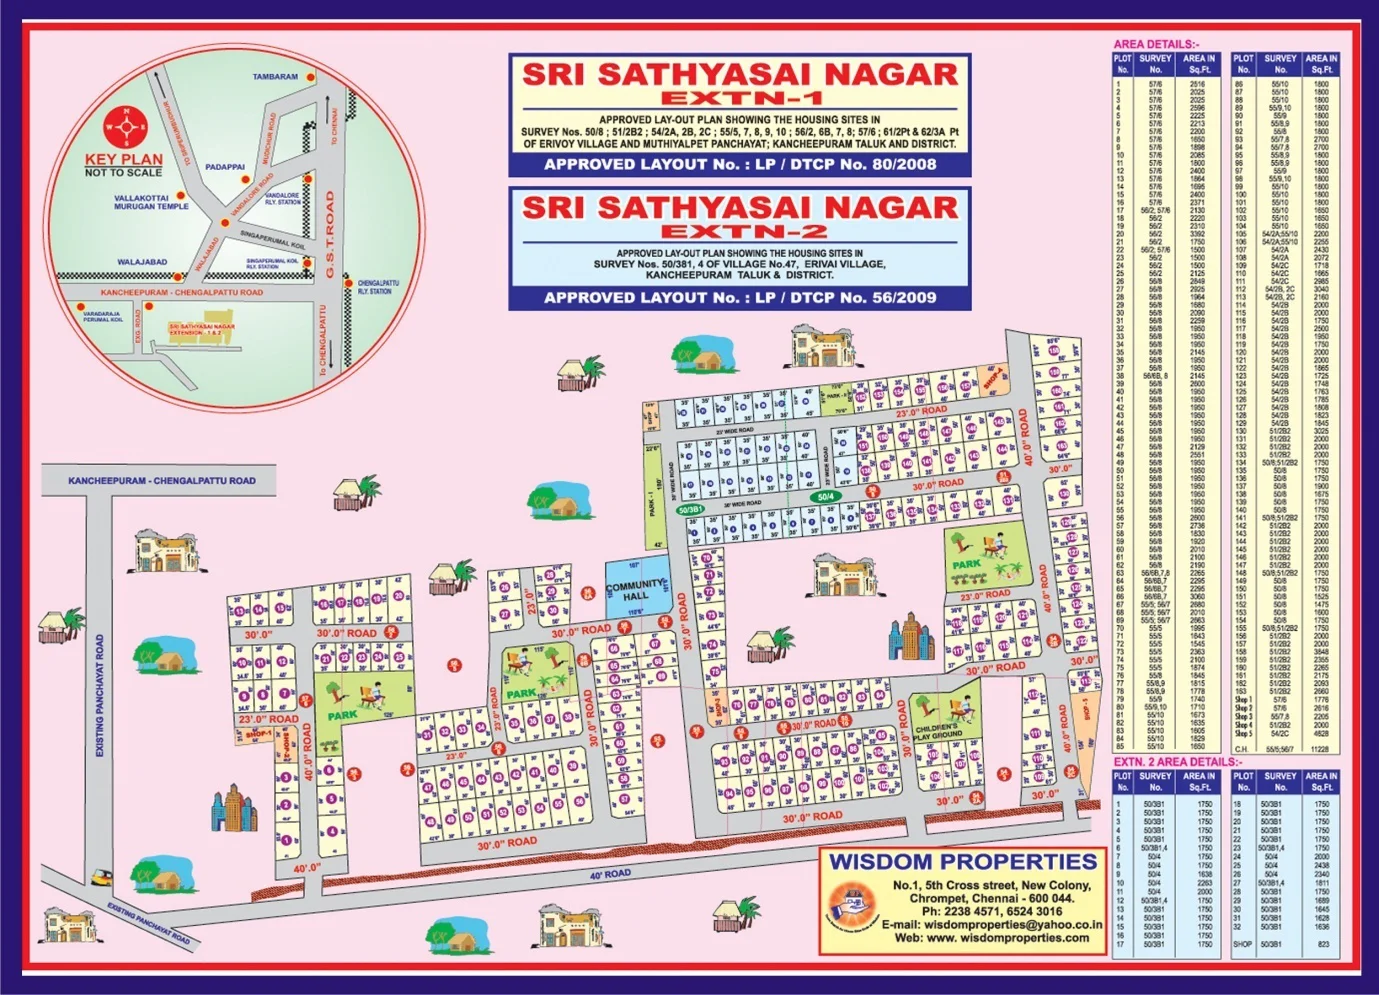 Kanchipuram Sri Sathyasai Nagar Layout